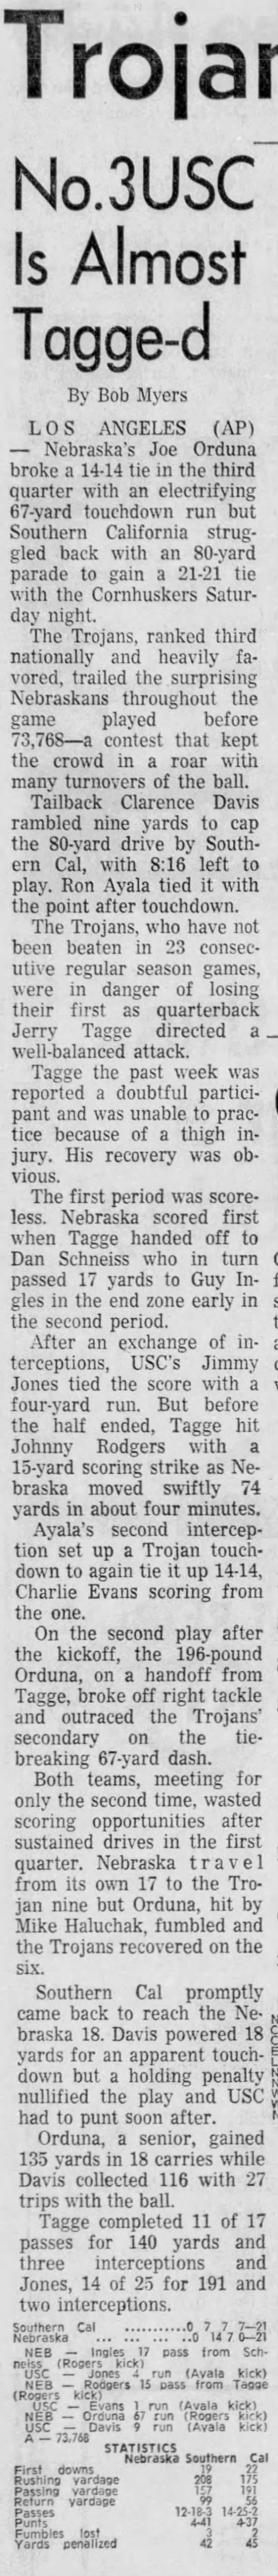 1970 Nebraska-USC, AP story - 